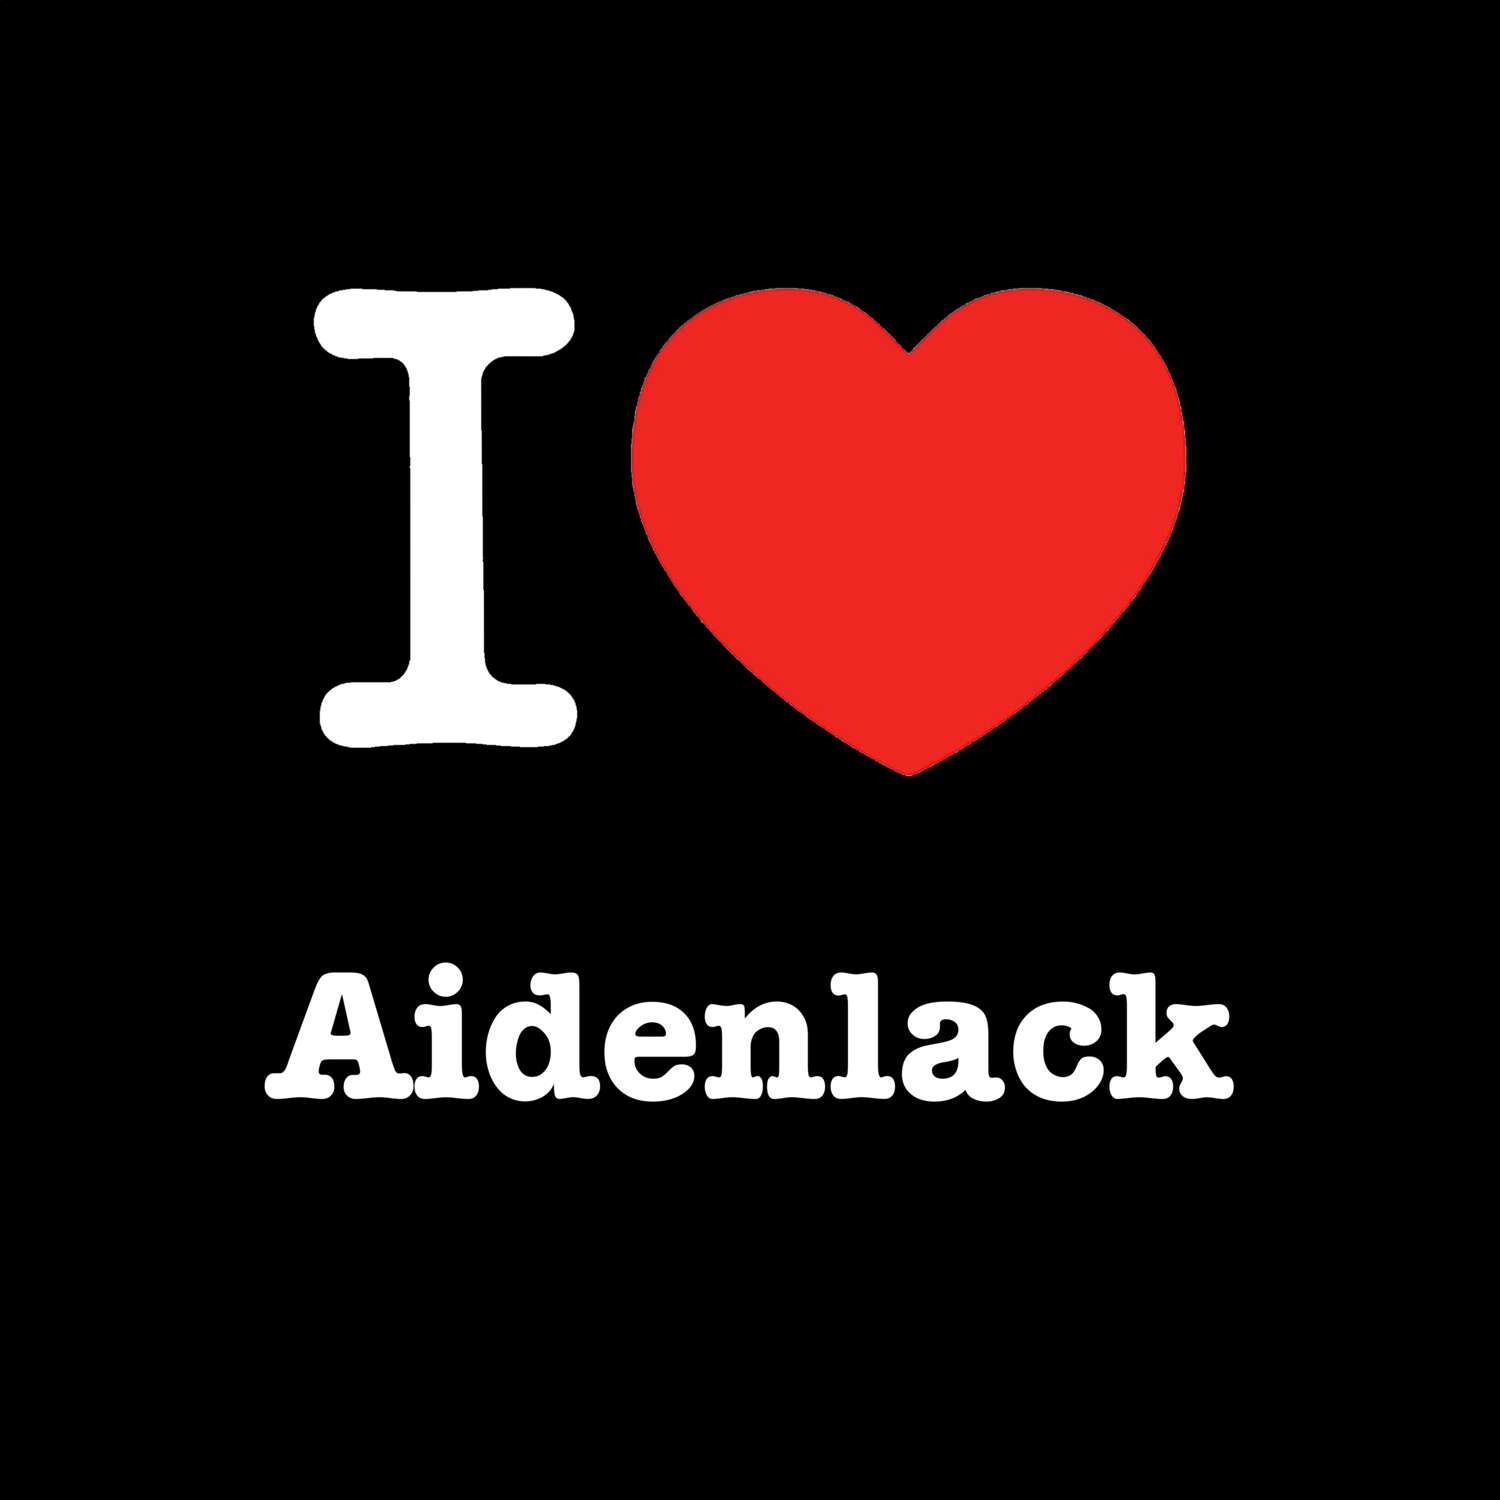 Aidenlack T-Shirt »I love«